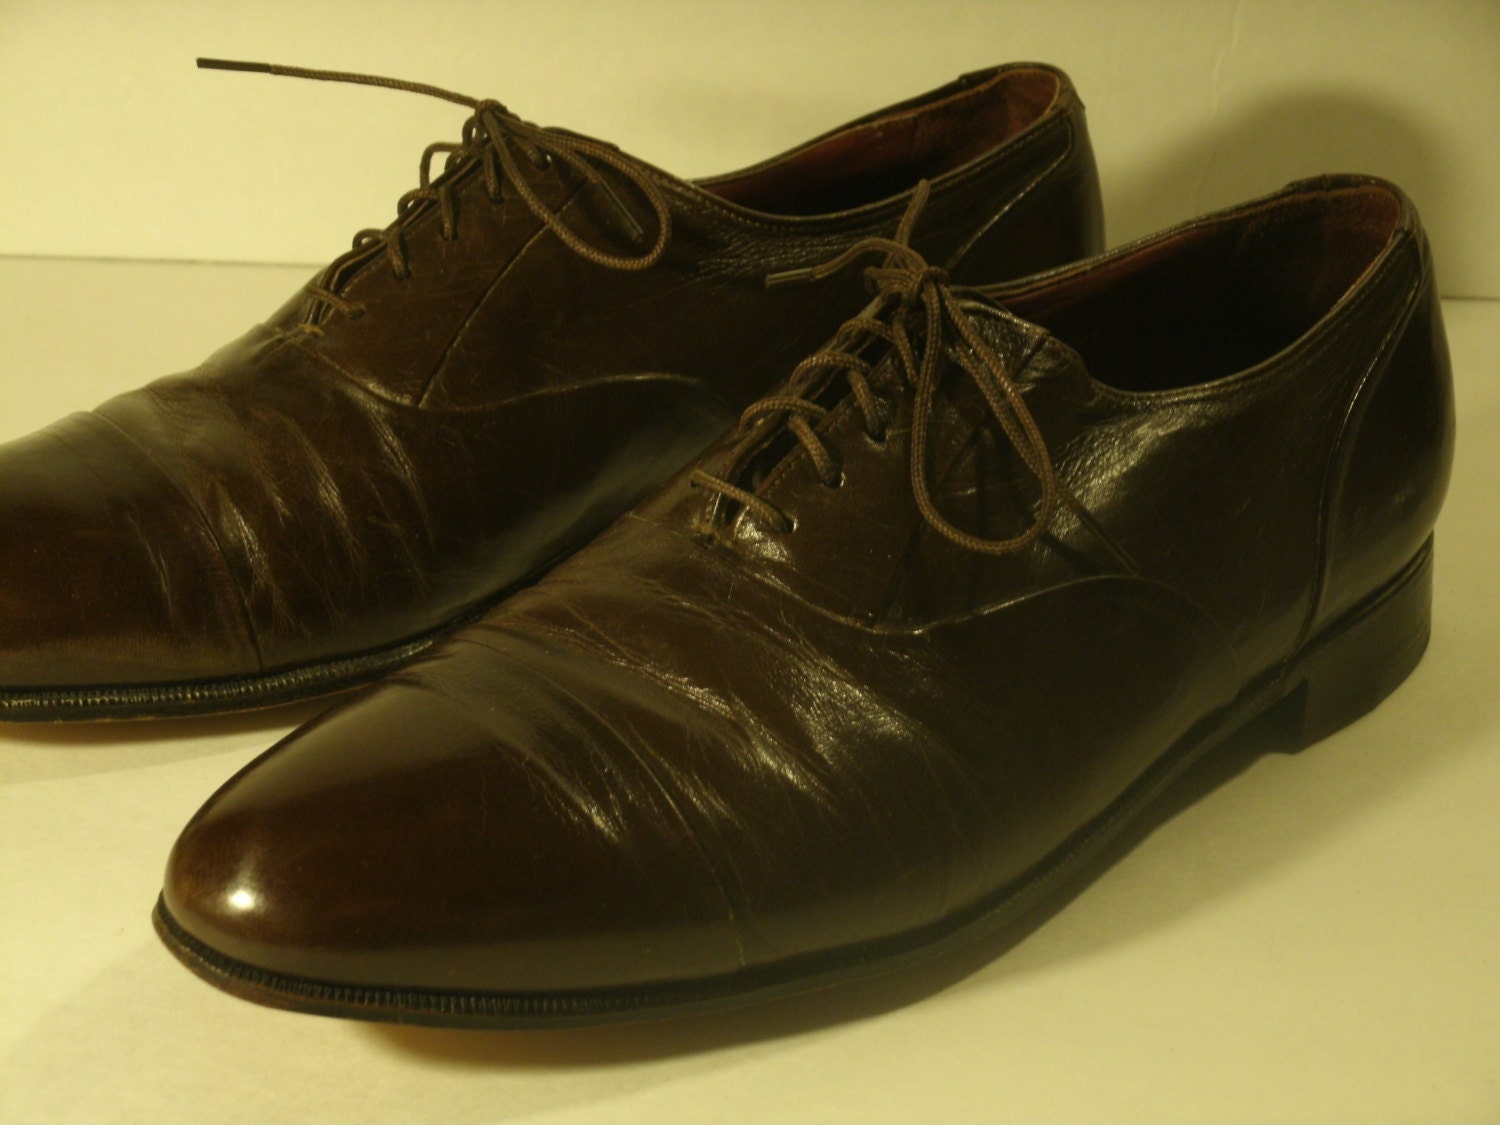 Vintage Florsheim Royal Imperial Oxford Shoes Brown Leather